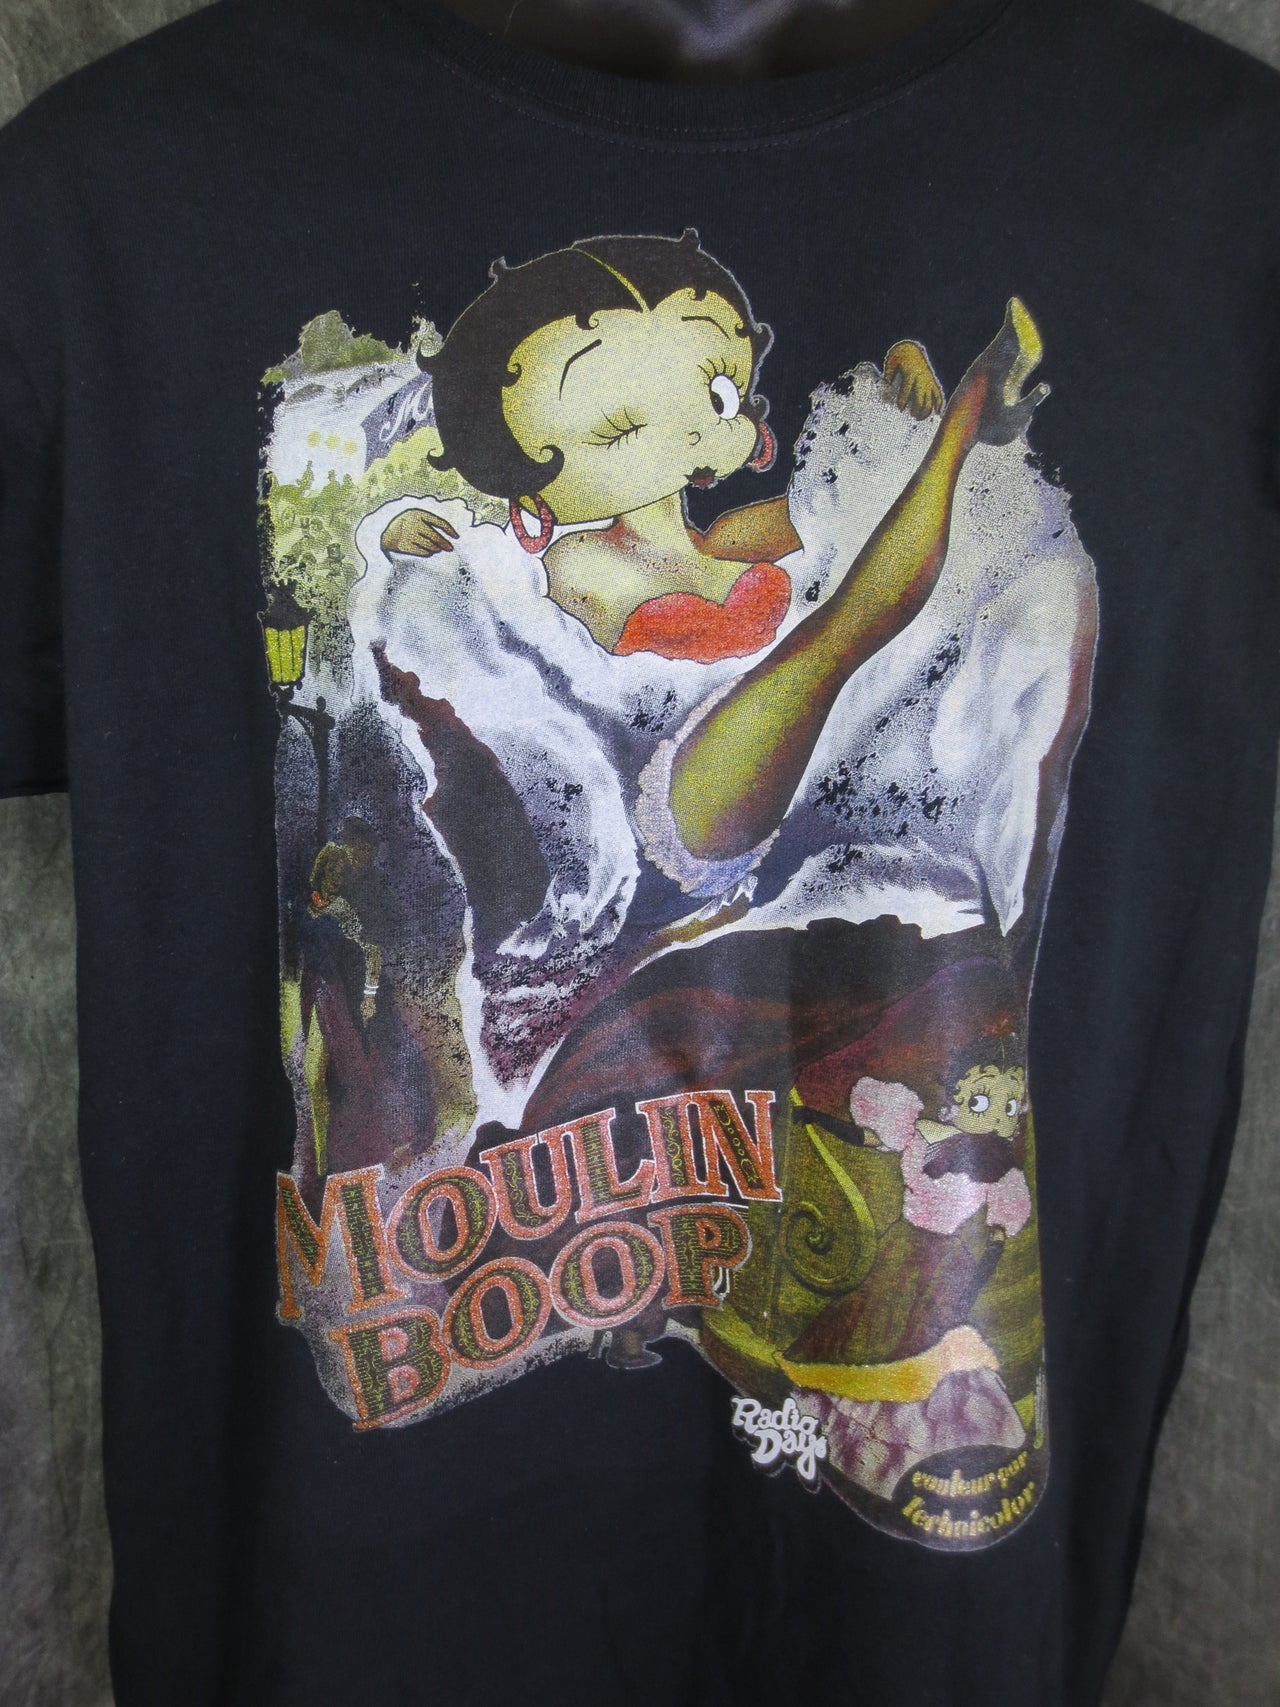 Betty Boop Moulin boop - TshirtNow.net - 2